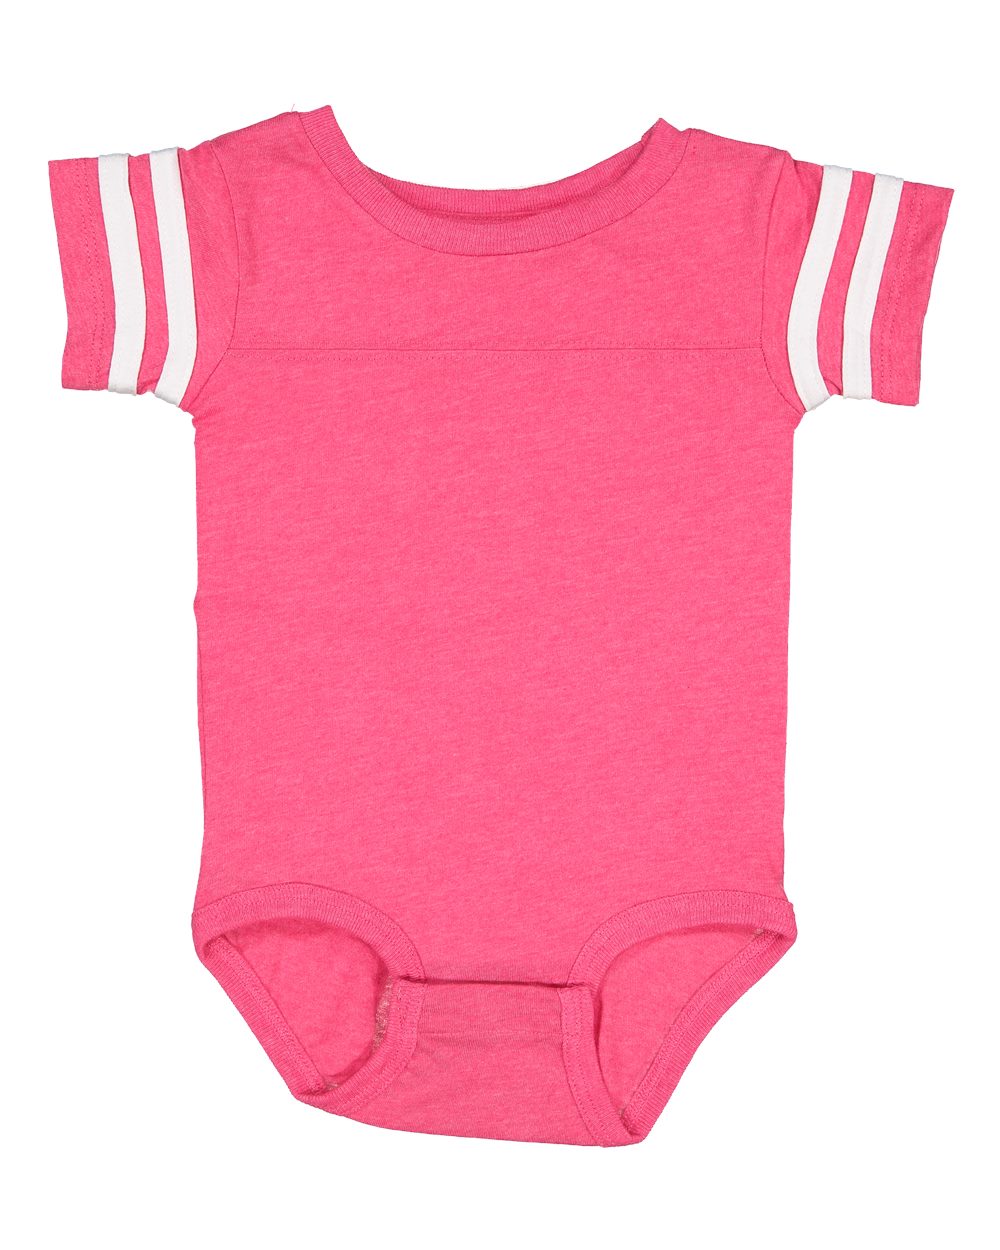 rabbit skins infant football jersey bodysuit vintage hot pink white